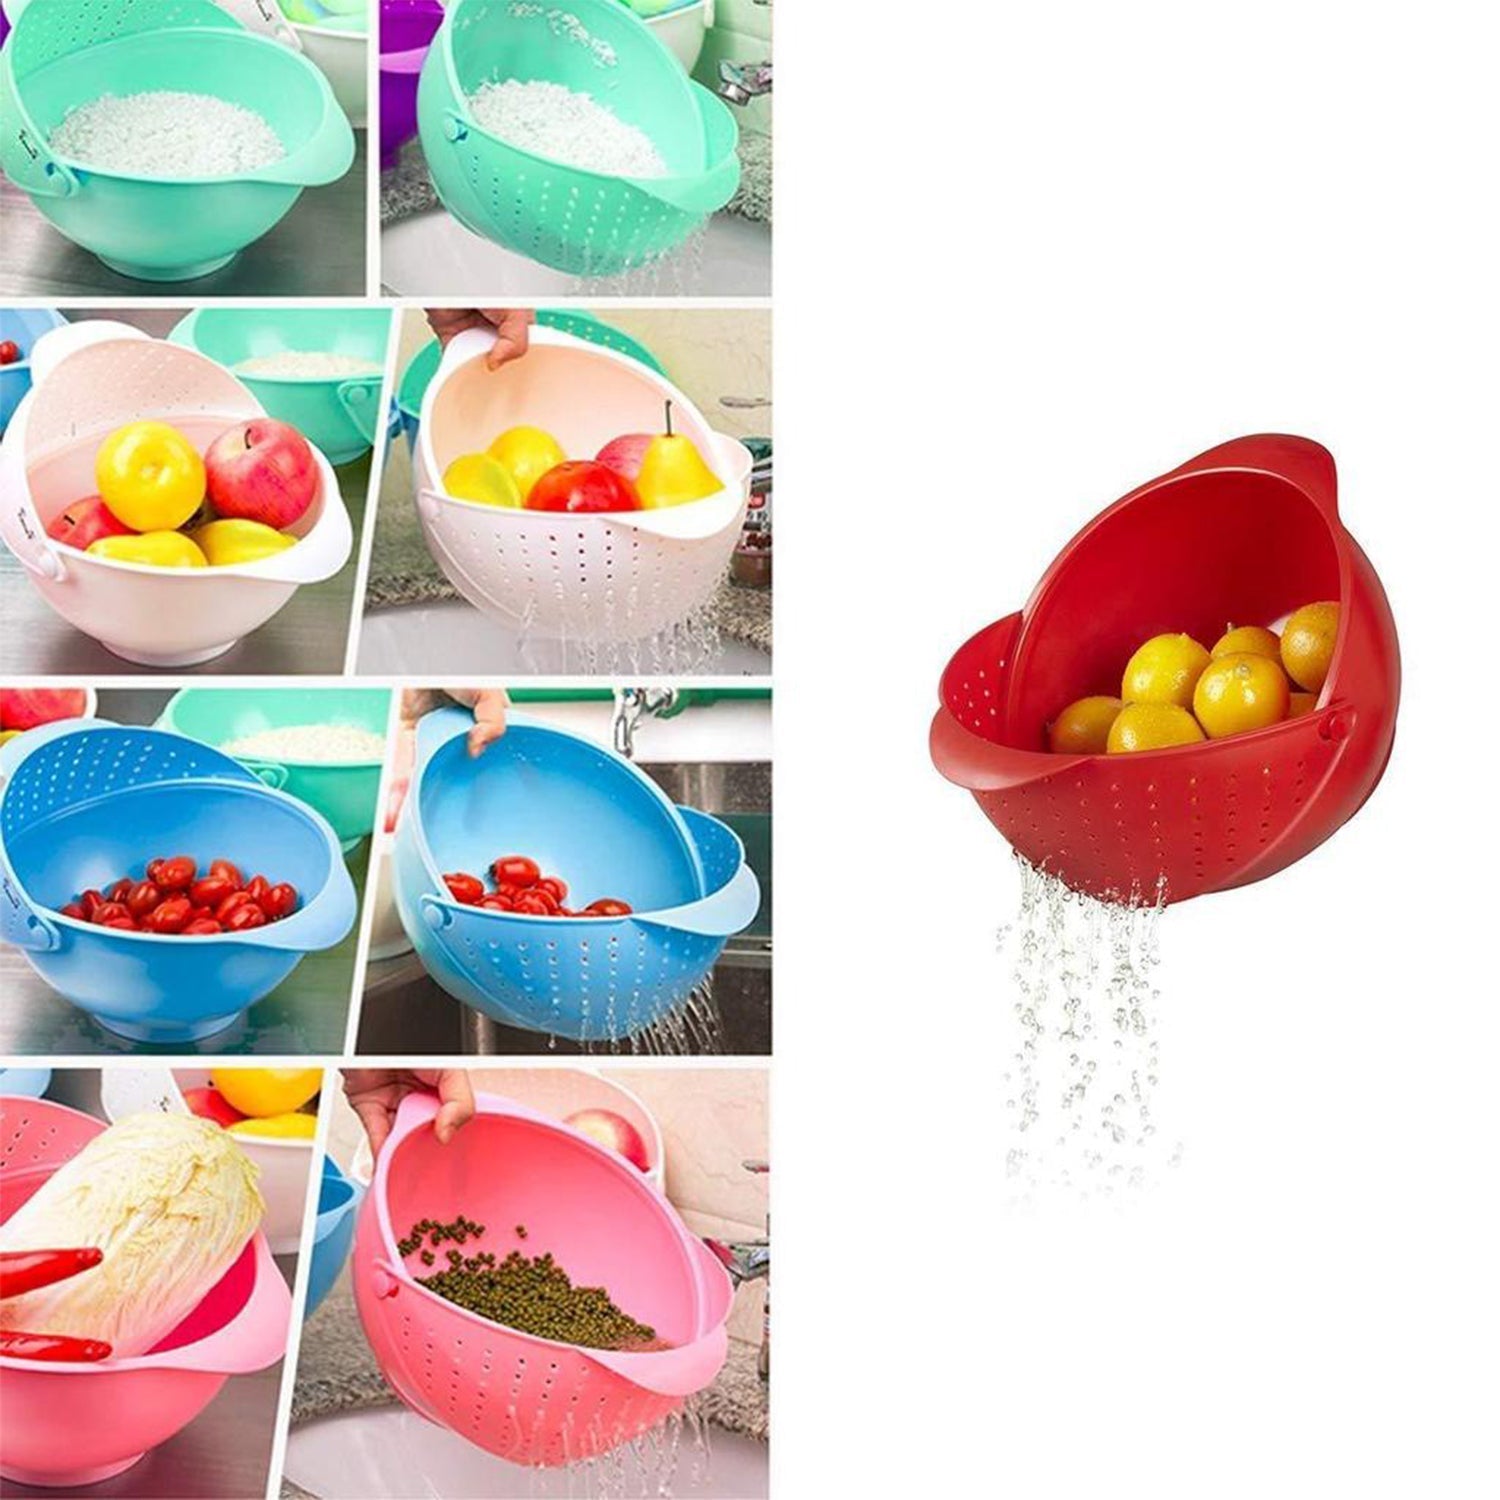 2145  Plastic Revolving Multi Functional Rice, Vegetable Fruit Wash Basket Bowl (Multi Colour) Dukan Daily